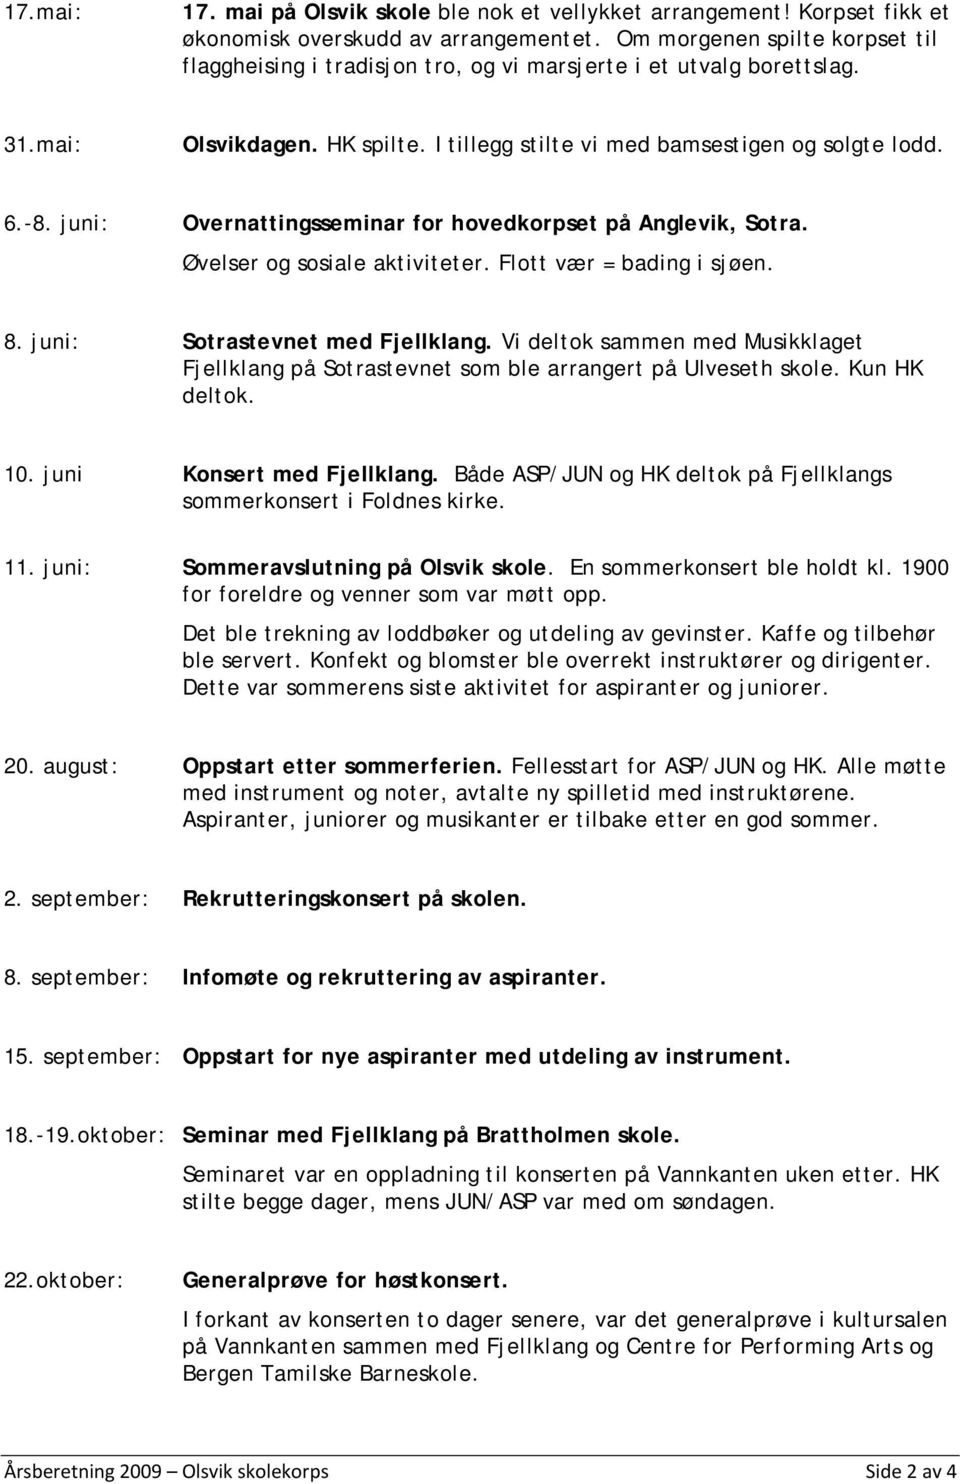 juni: Overnattingsseminar for hovedkorpset på Anglevik, Sotra. Øvelser og sosiale aktiviteter. Flott vær = bading i sjøen. 8. juni: Sotrastevnet med Fjellklang.